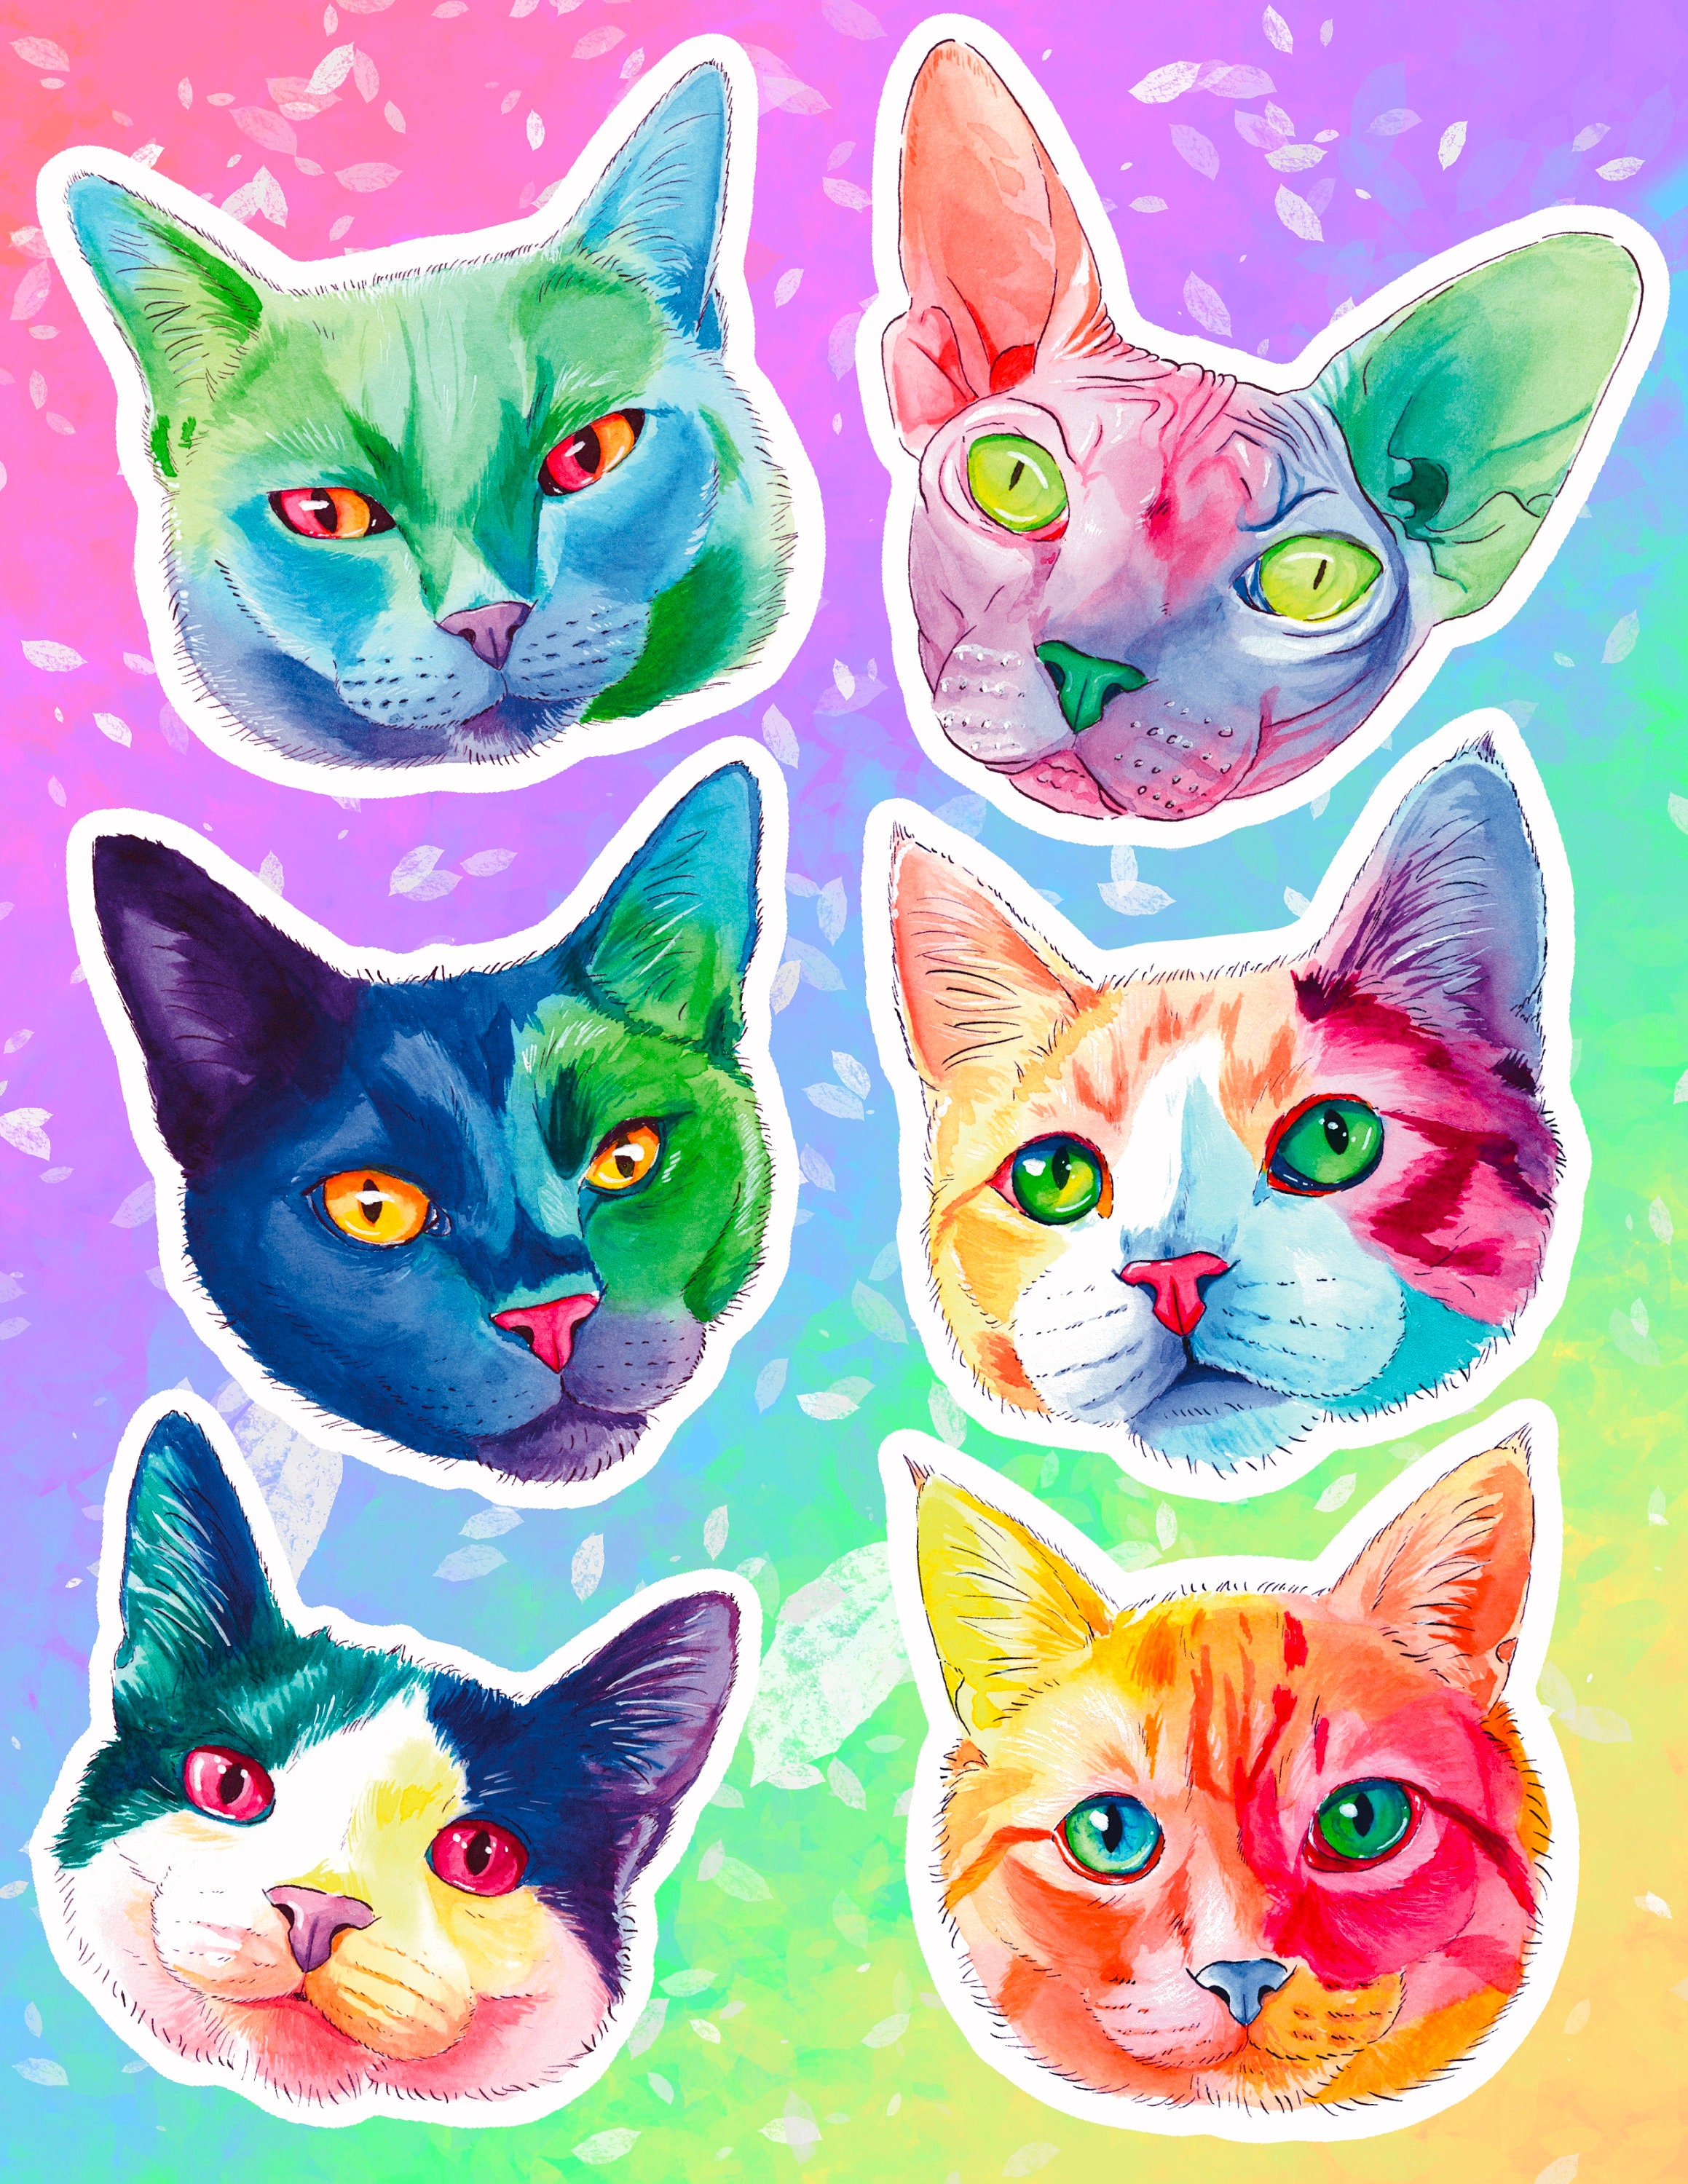 rainbow friends  Sticker for Sale by vinna-cat